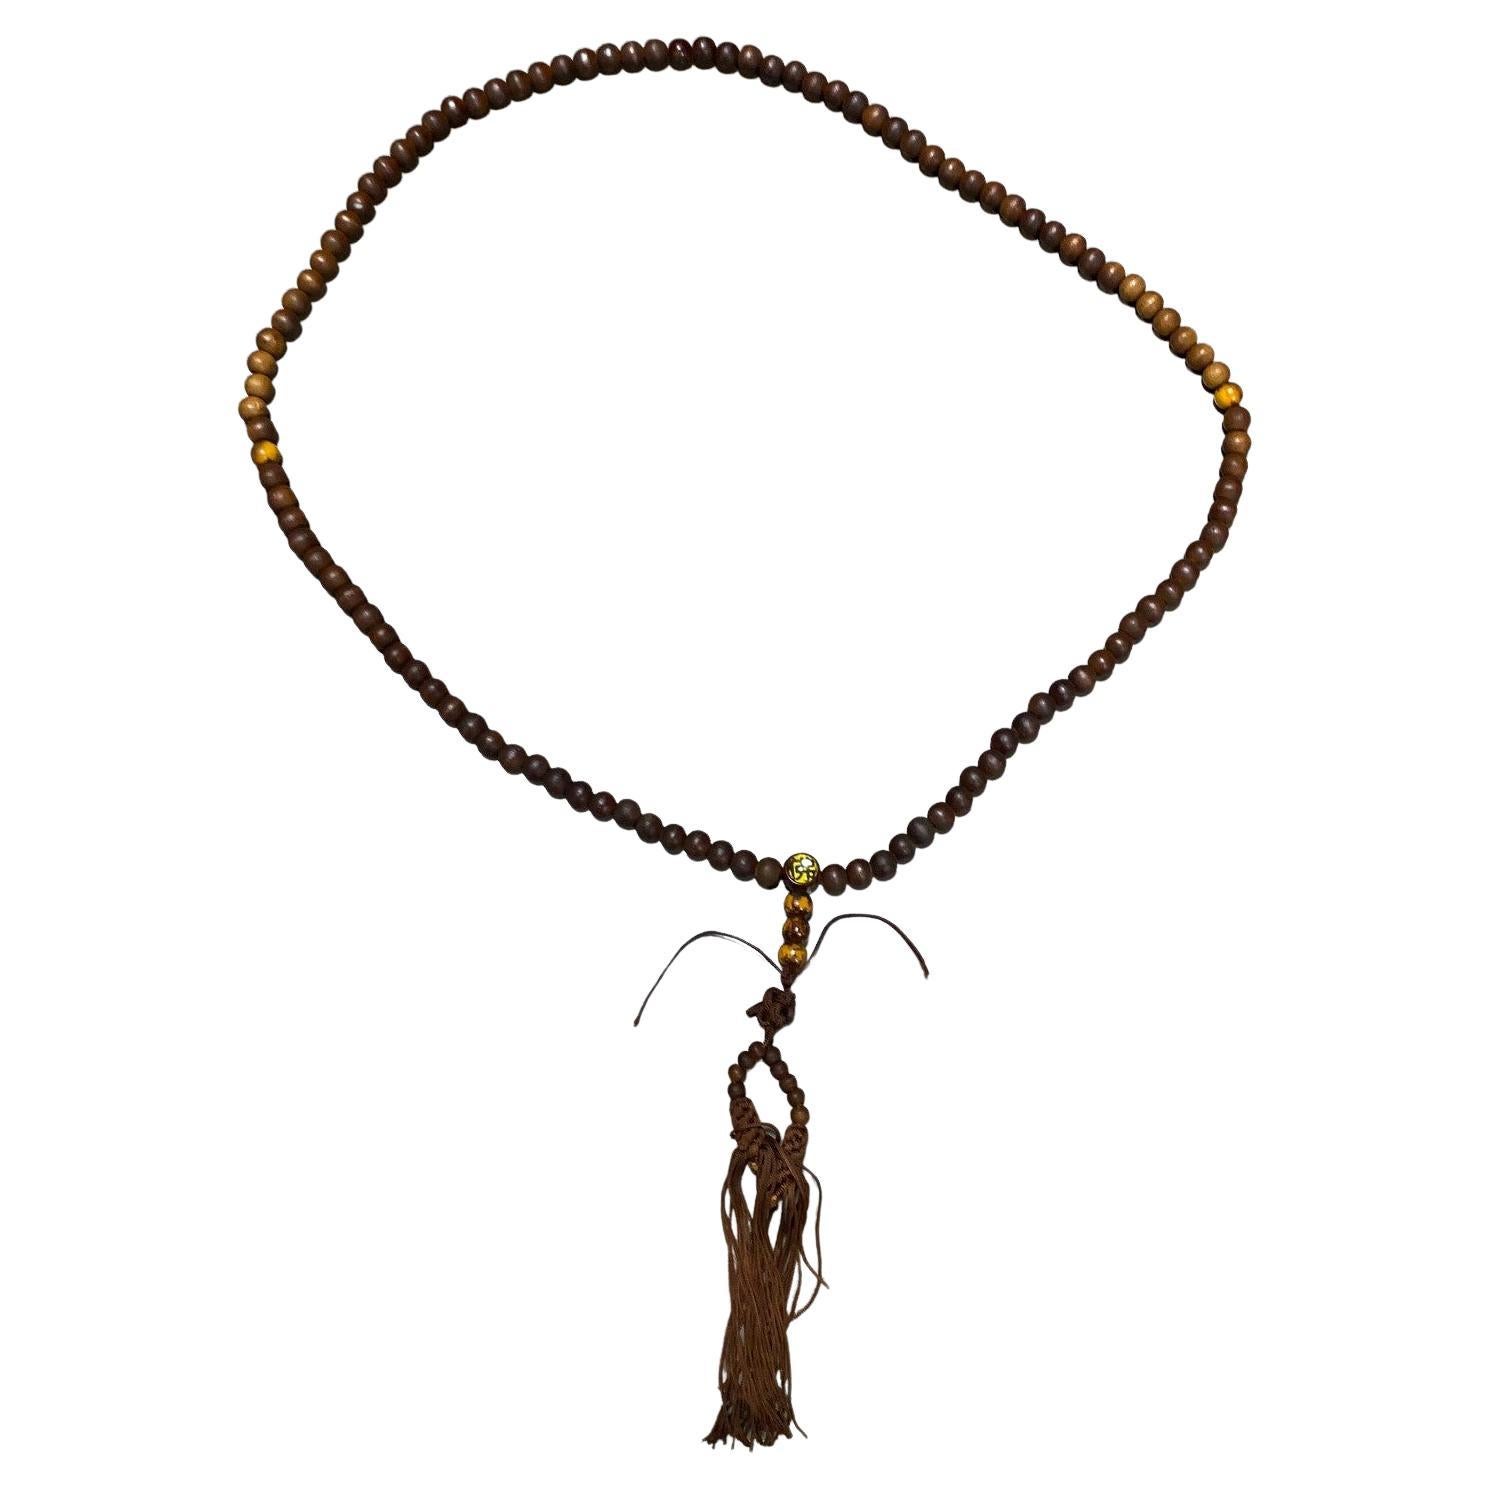 Japanese Temple Shrine Buddhist Monk Juzu Prayer Beads Mala Rosary Necklace 